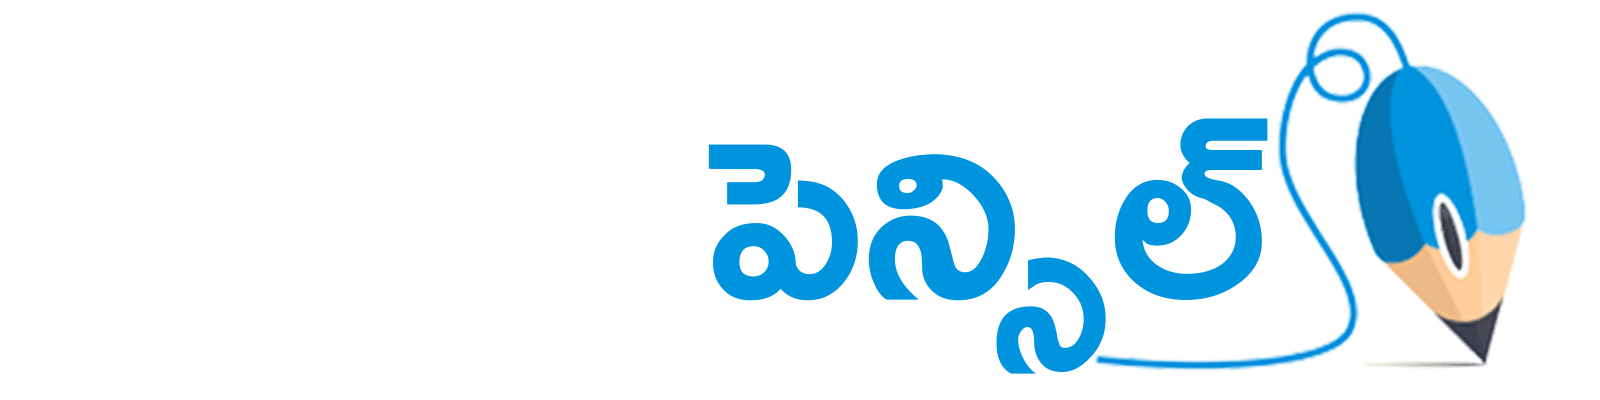 Telugu Pencil Footer Logo